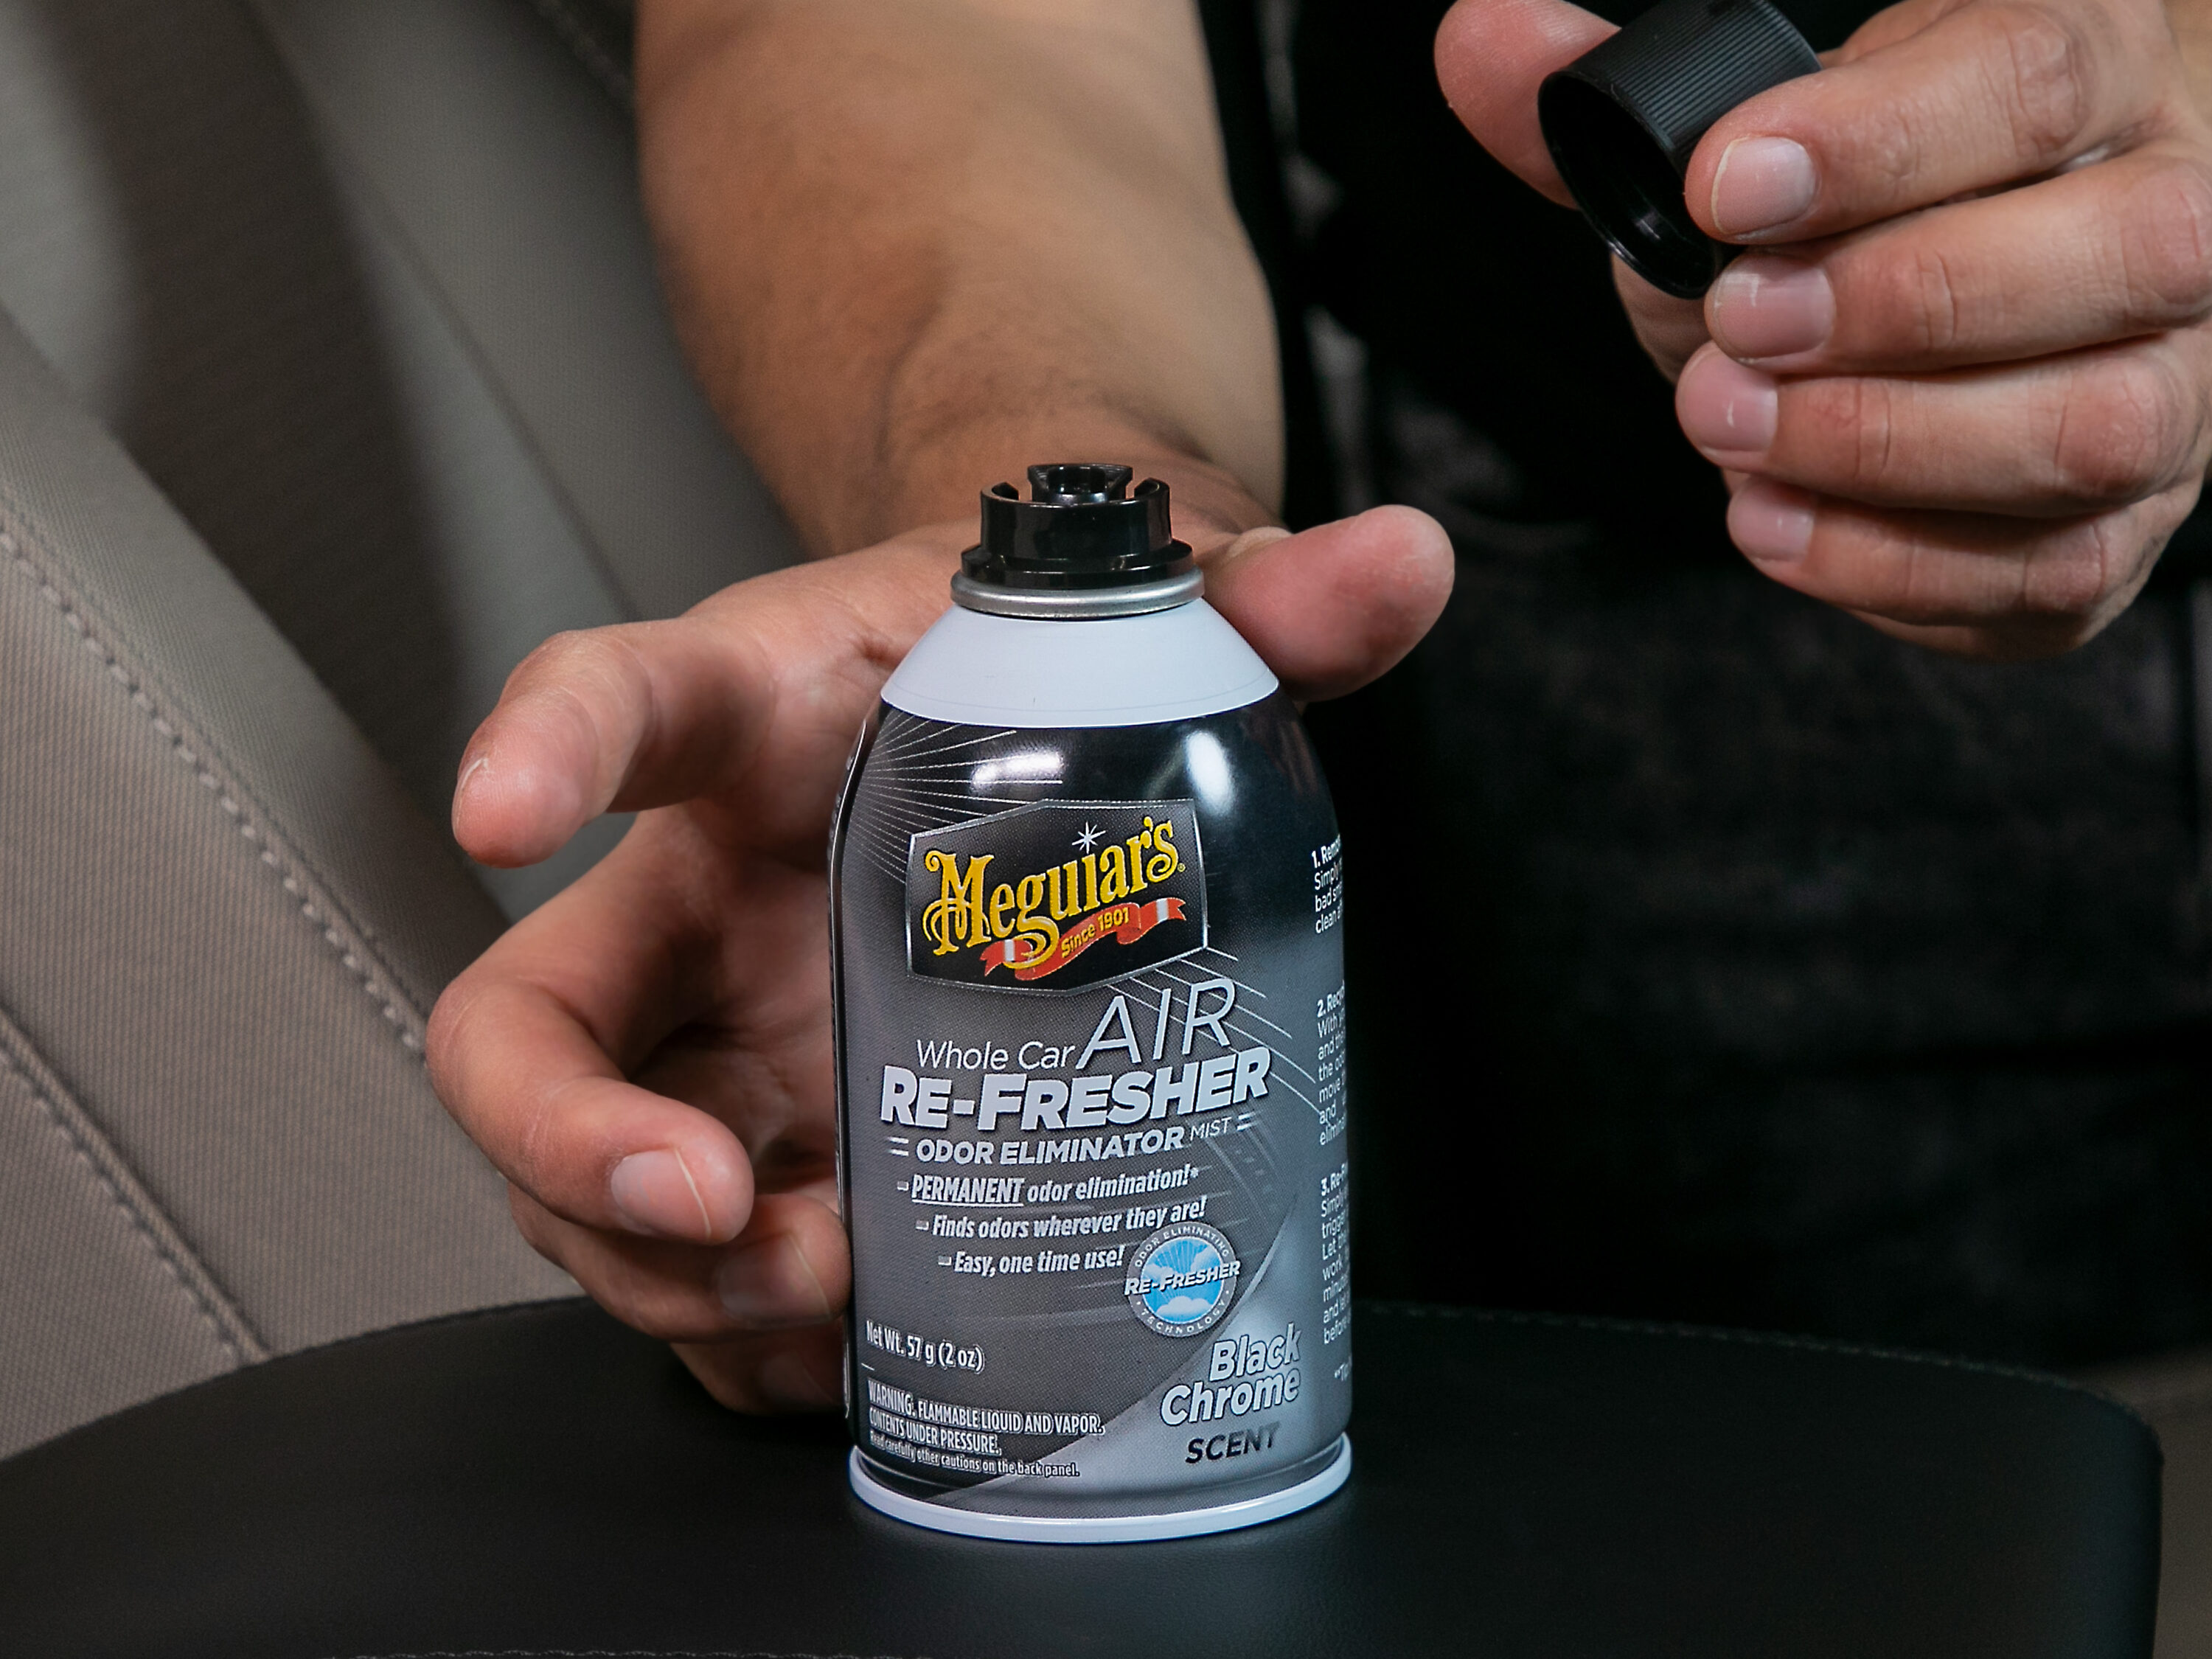 Meguiar's Whole Car Air Re-fresher Odor Eliminator *Black Chrome Scent -  Product Profiles 